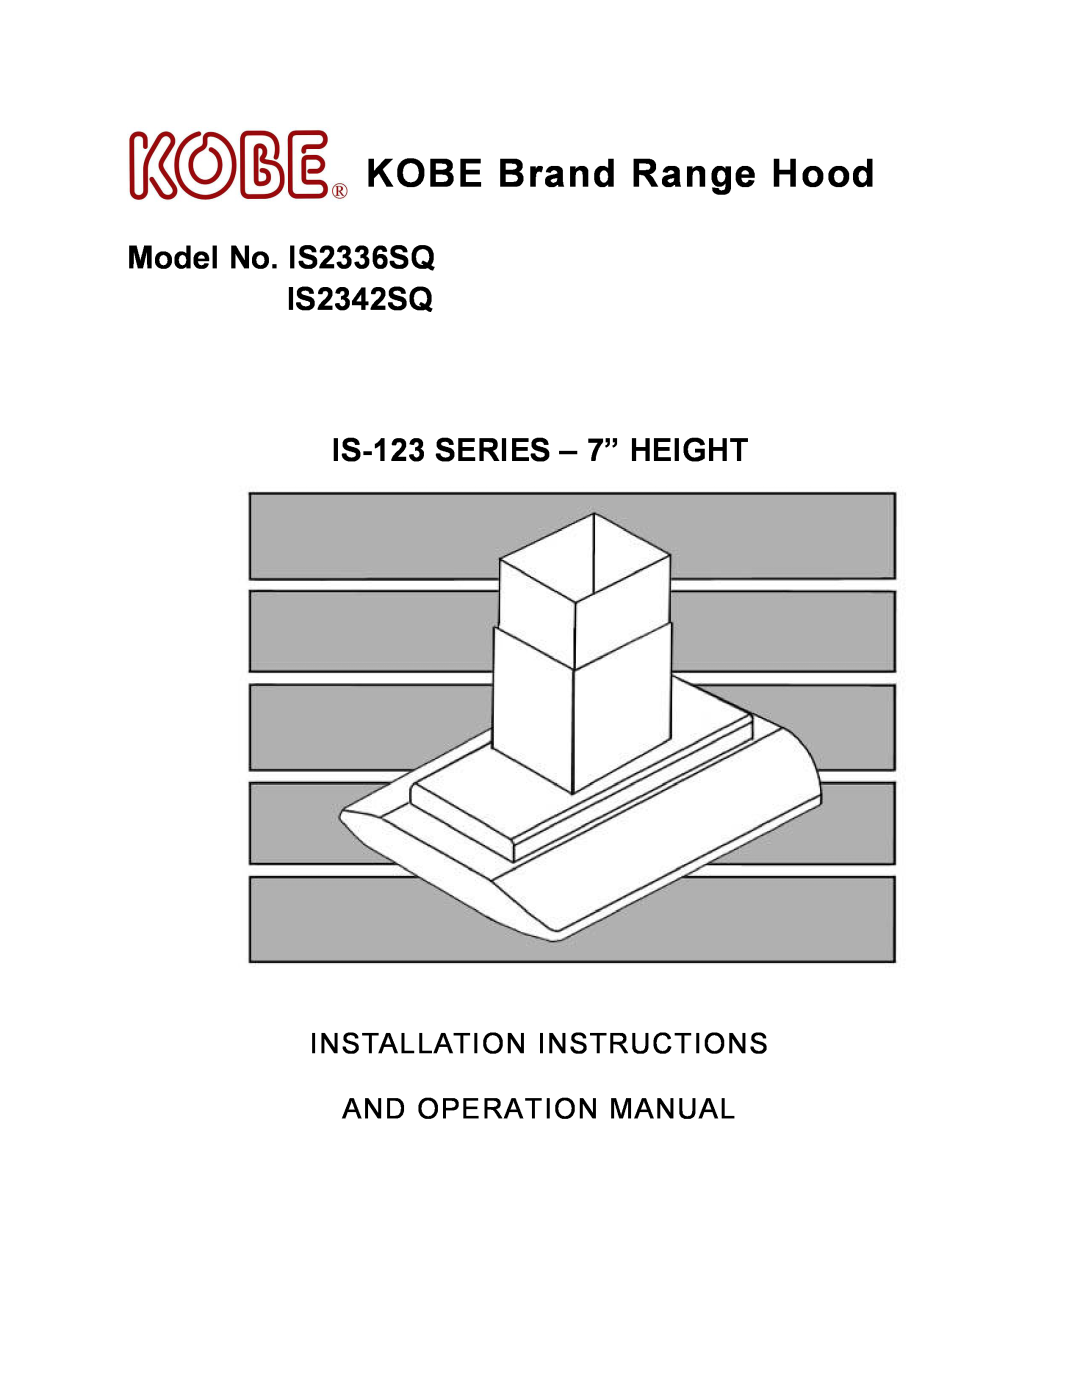 Kobe Range Hoods IS2342SQ, IS2336SQ installation instructions KOBE Brand Range Hood 